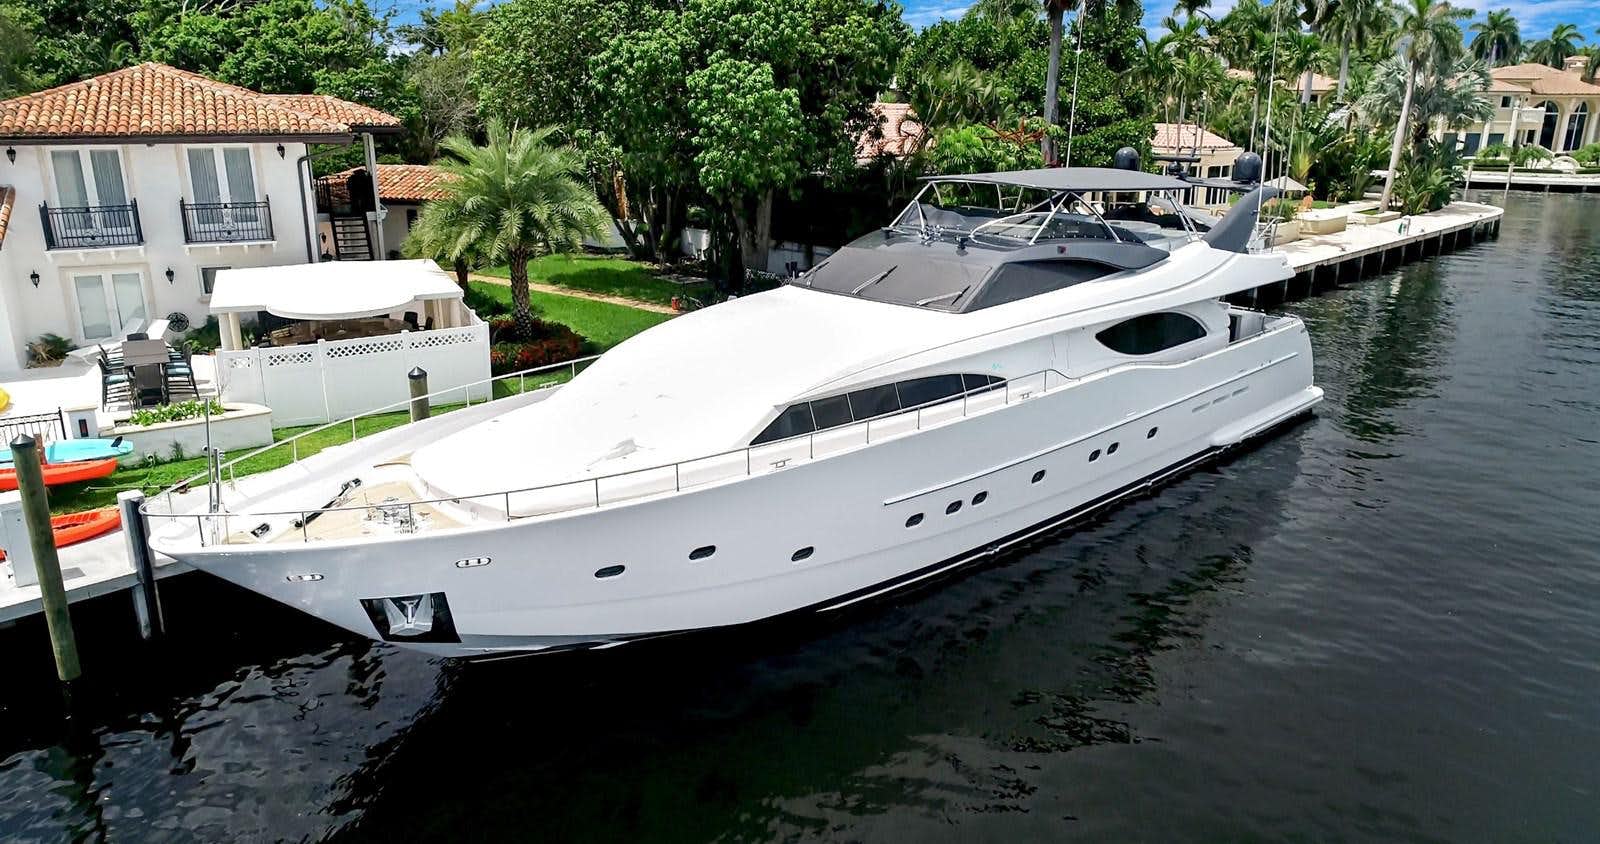 El ladrillo iii
Yacht for Sale